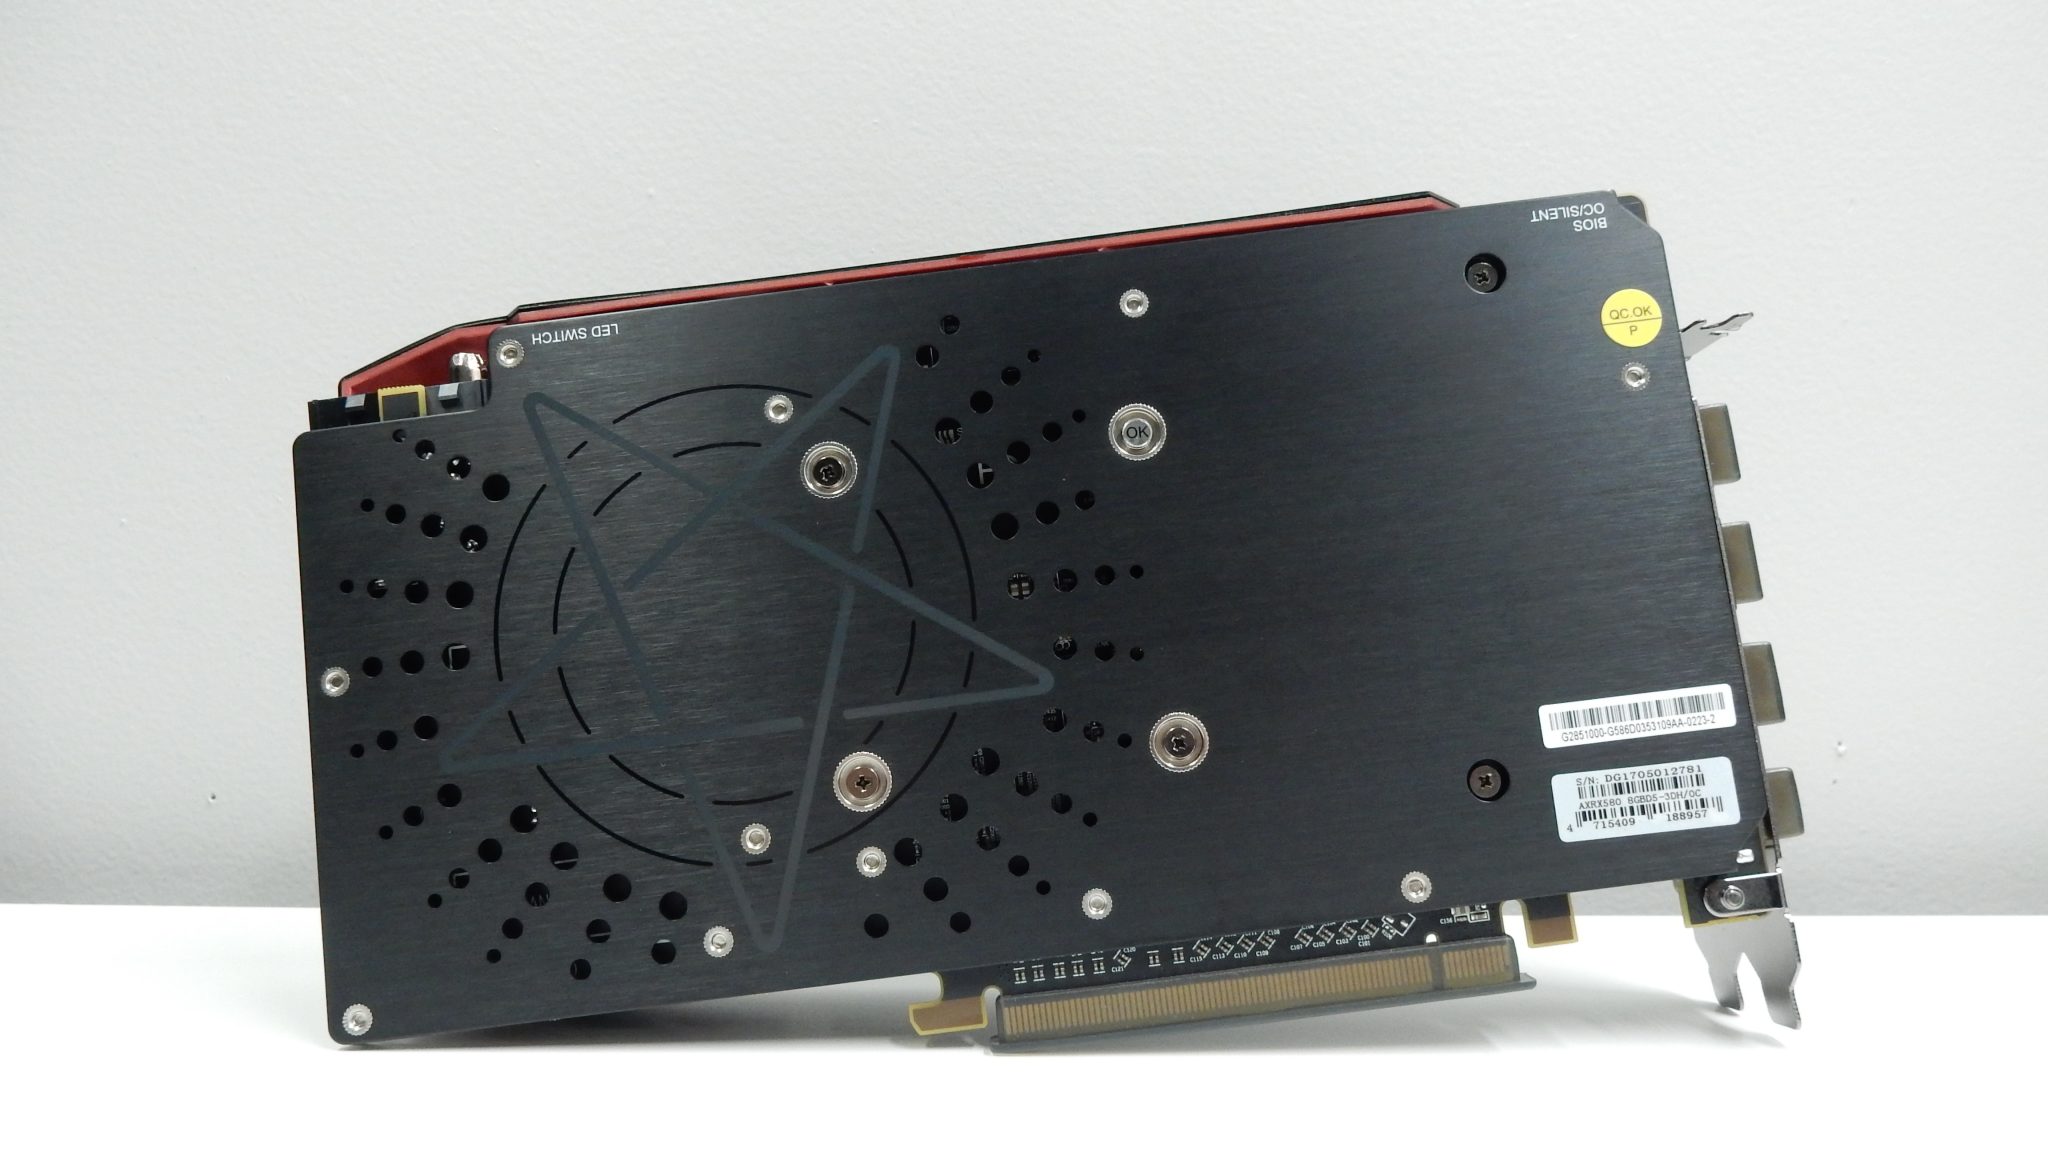 Red Devil Radeon RX 580 8GB GDDR5 Review - Page 2 of 5 - Bjorn3D.com